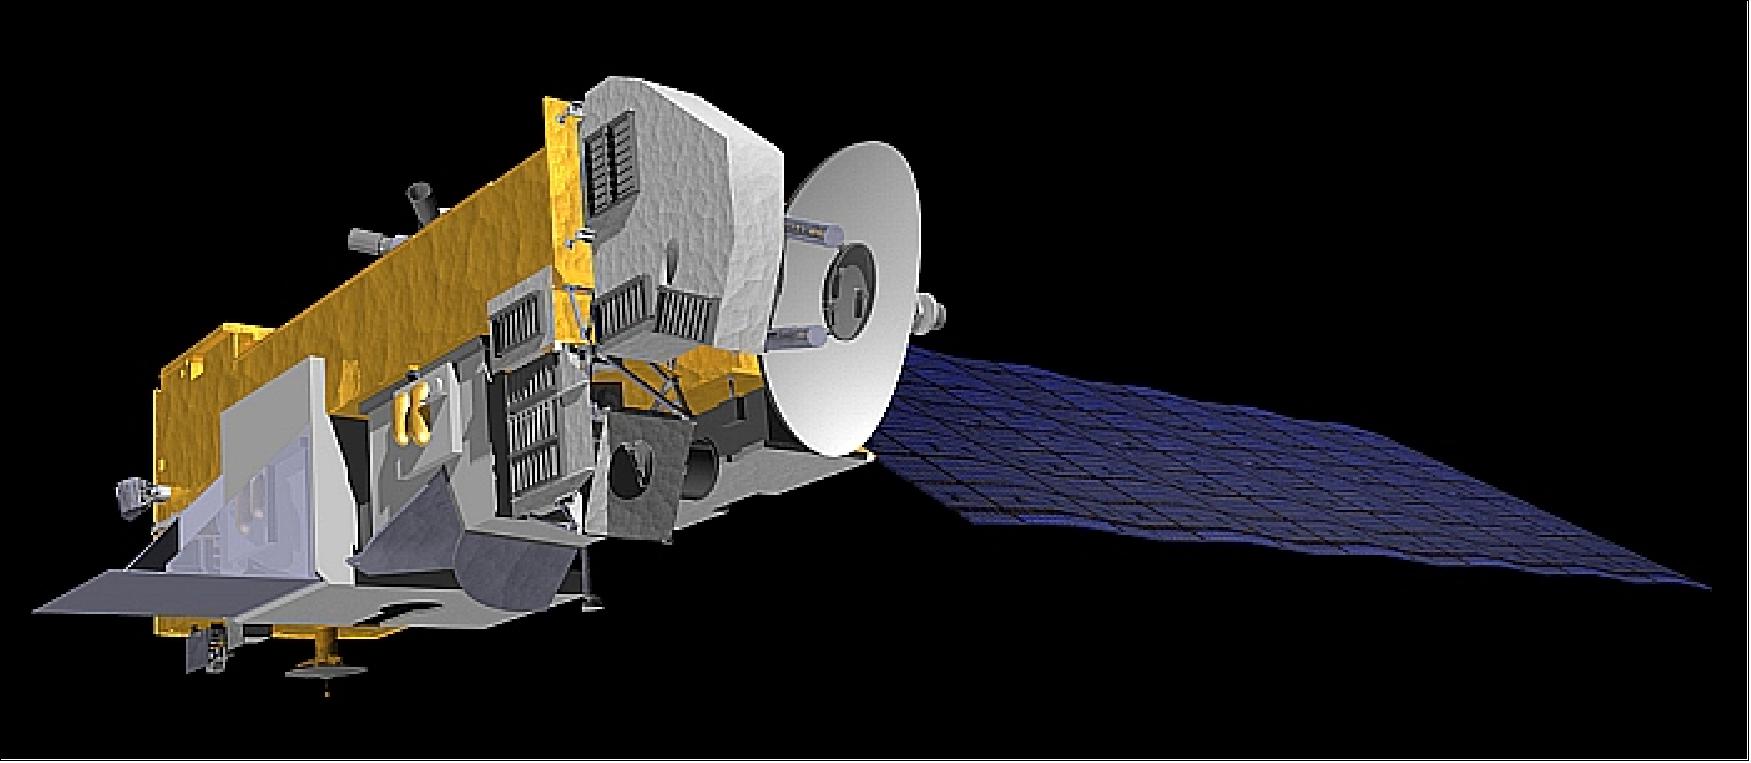 Figure 3: Alternate view of the Aura spacecraft (image credit: NASA)